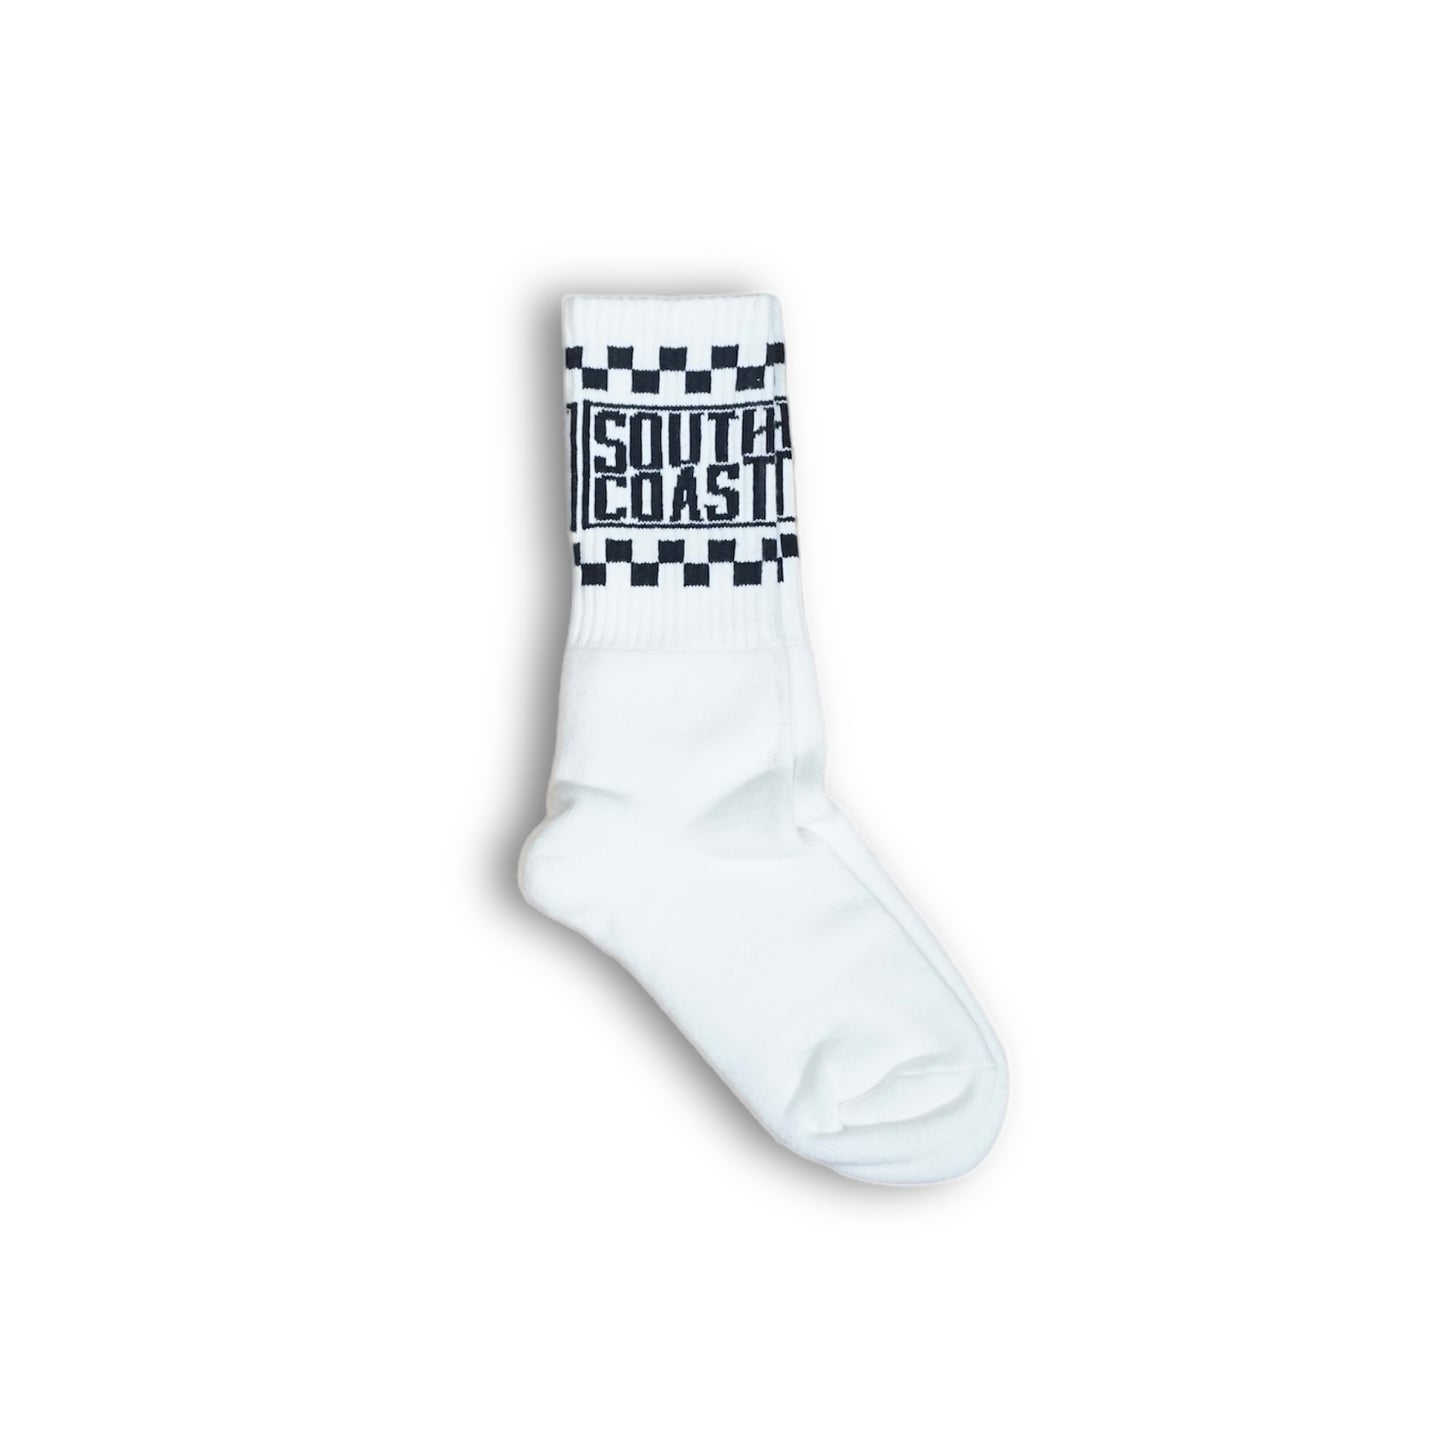 South Coast Crew Socks